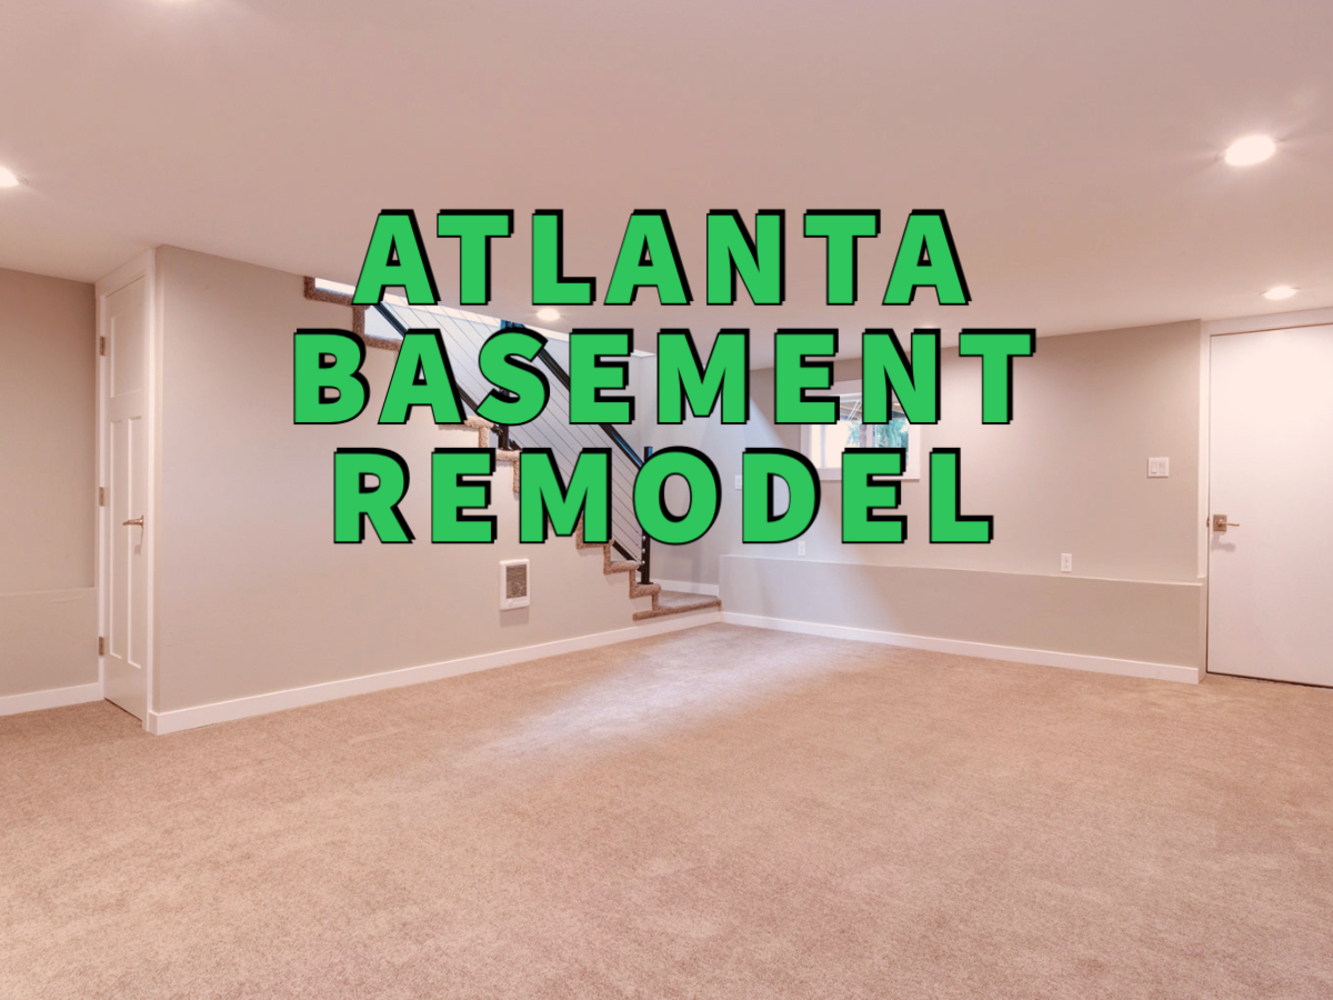 Atlanta basement remodel written in green over recently renovated empty basement